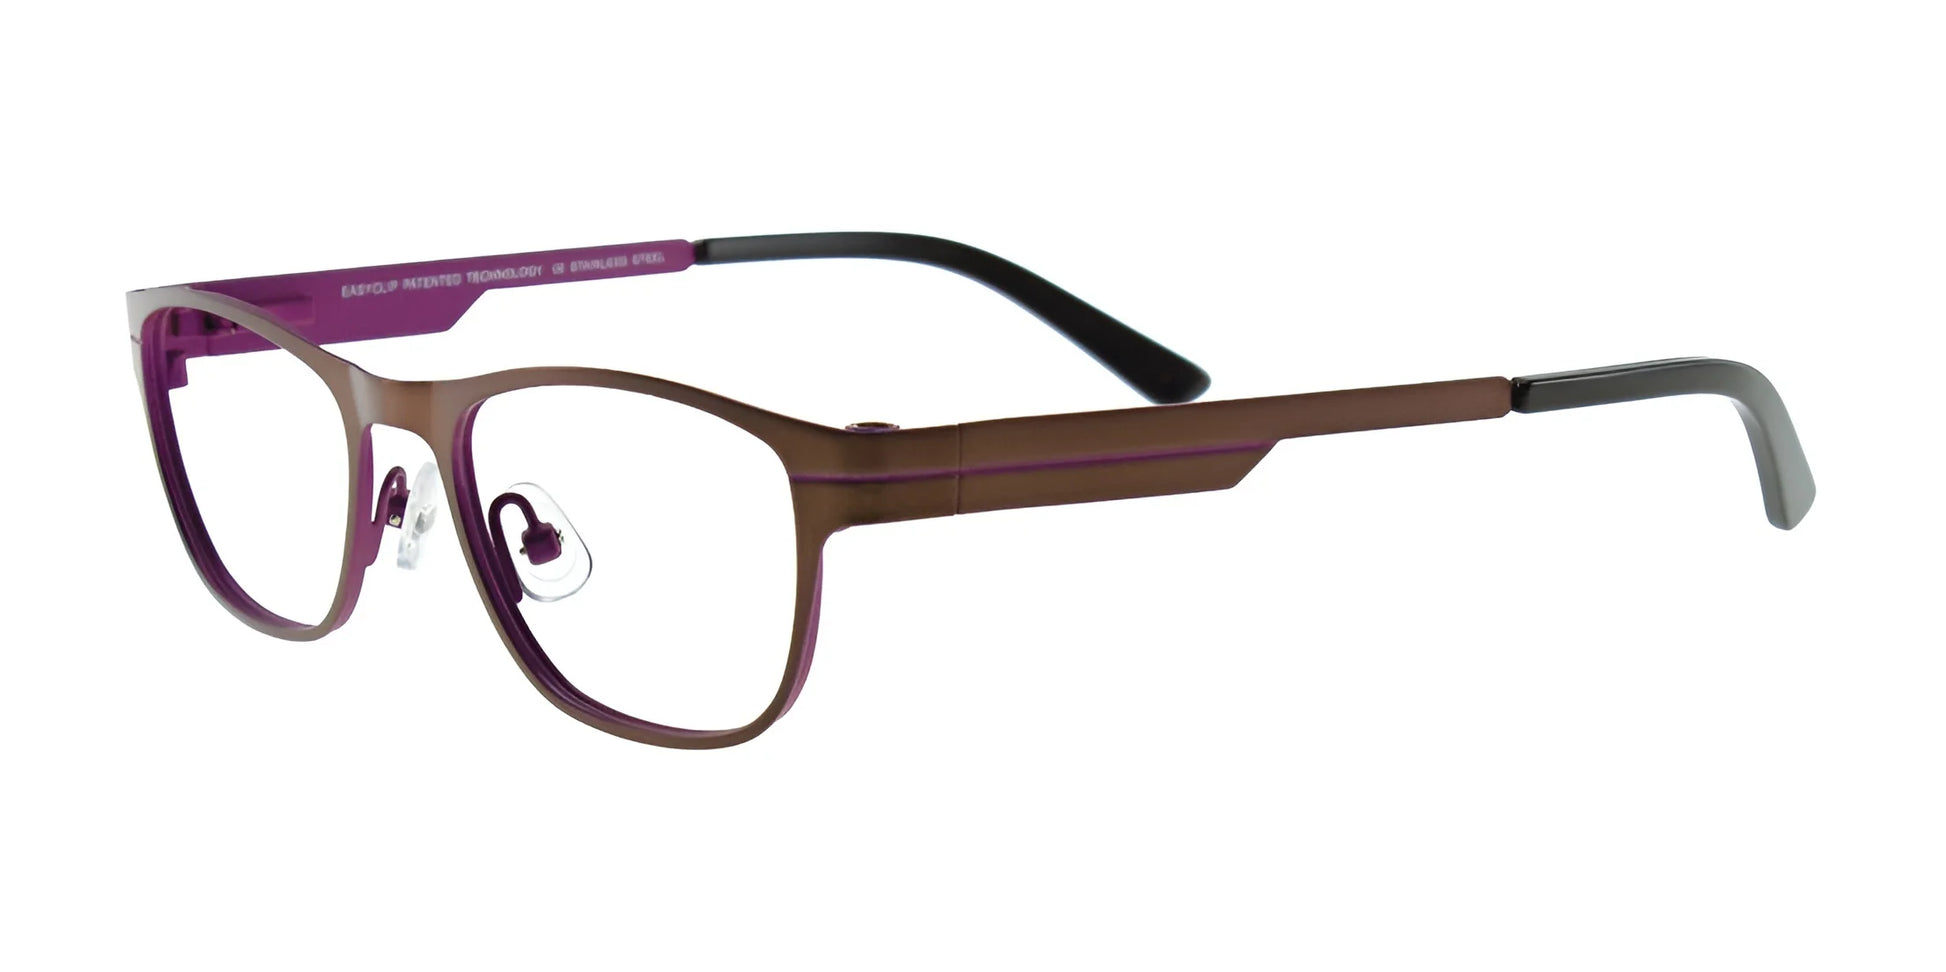 EasyClip EC269 Eyeglasses with Clip-on Sunglasses Matt Dark Bronze & Mauve